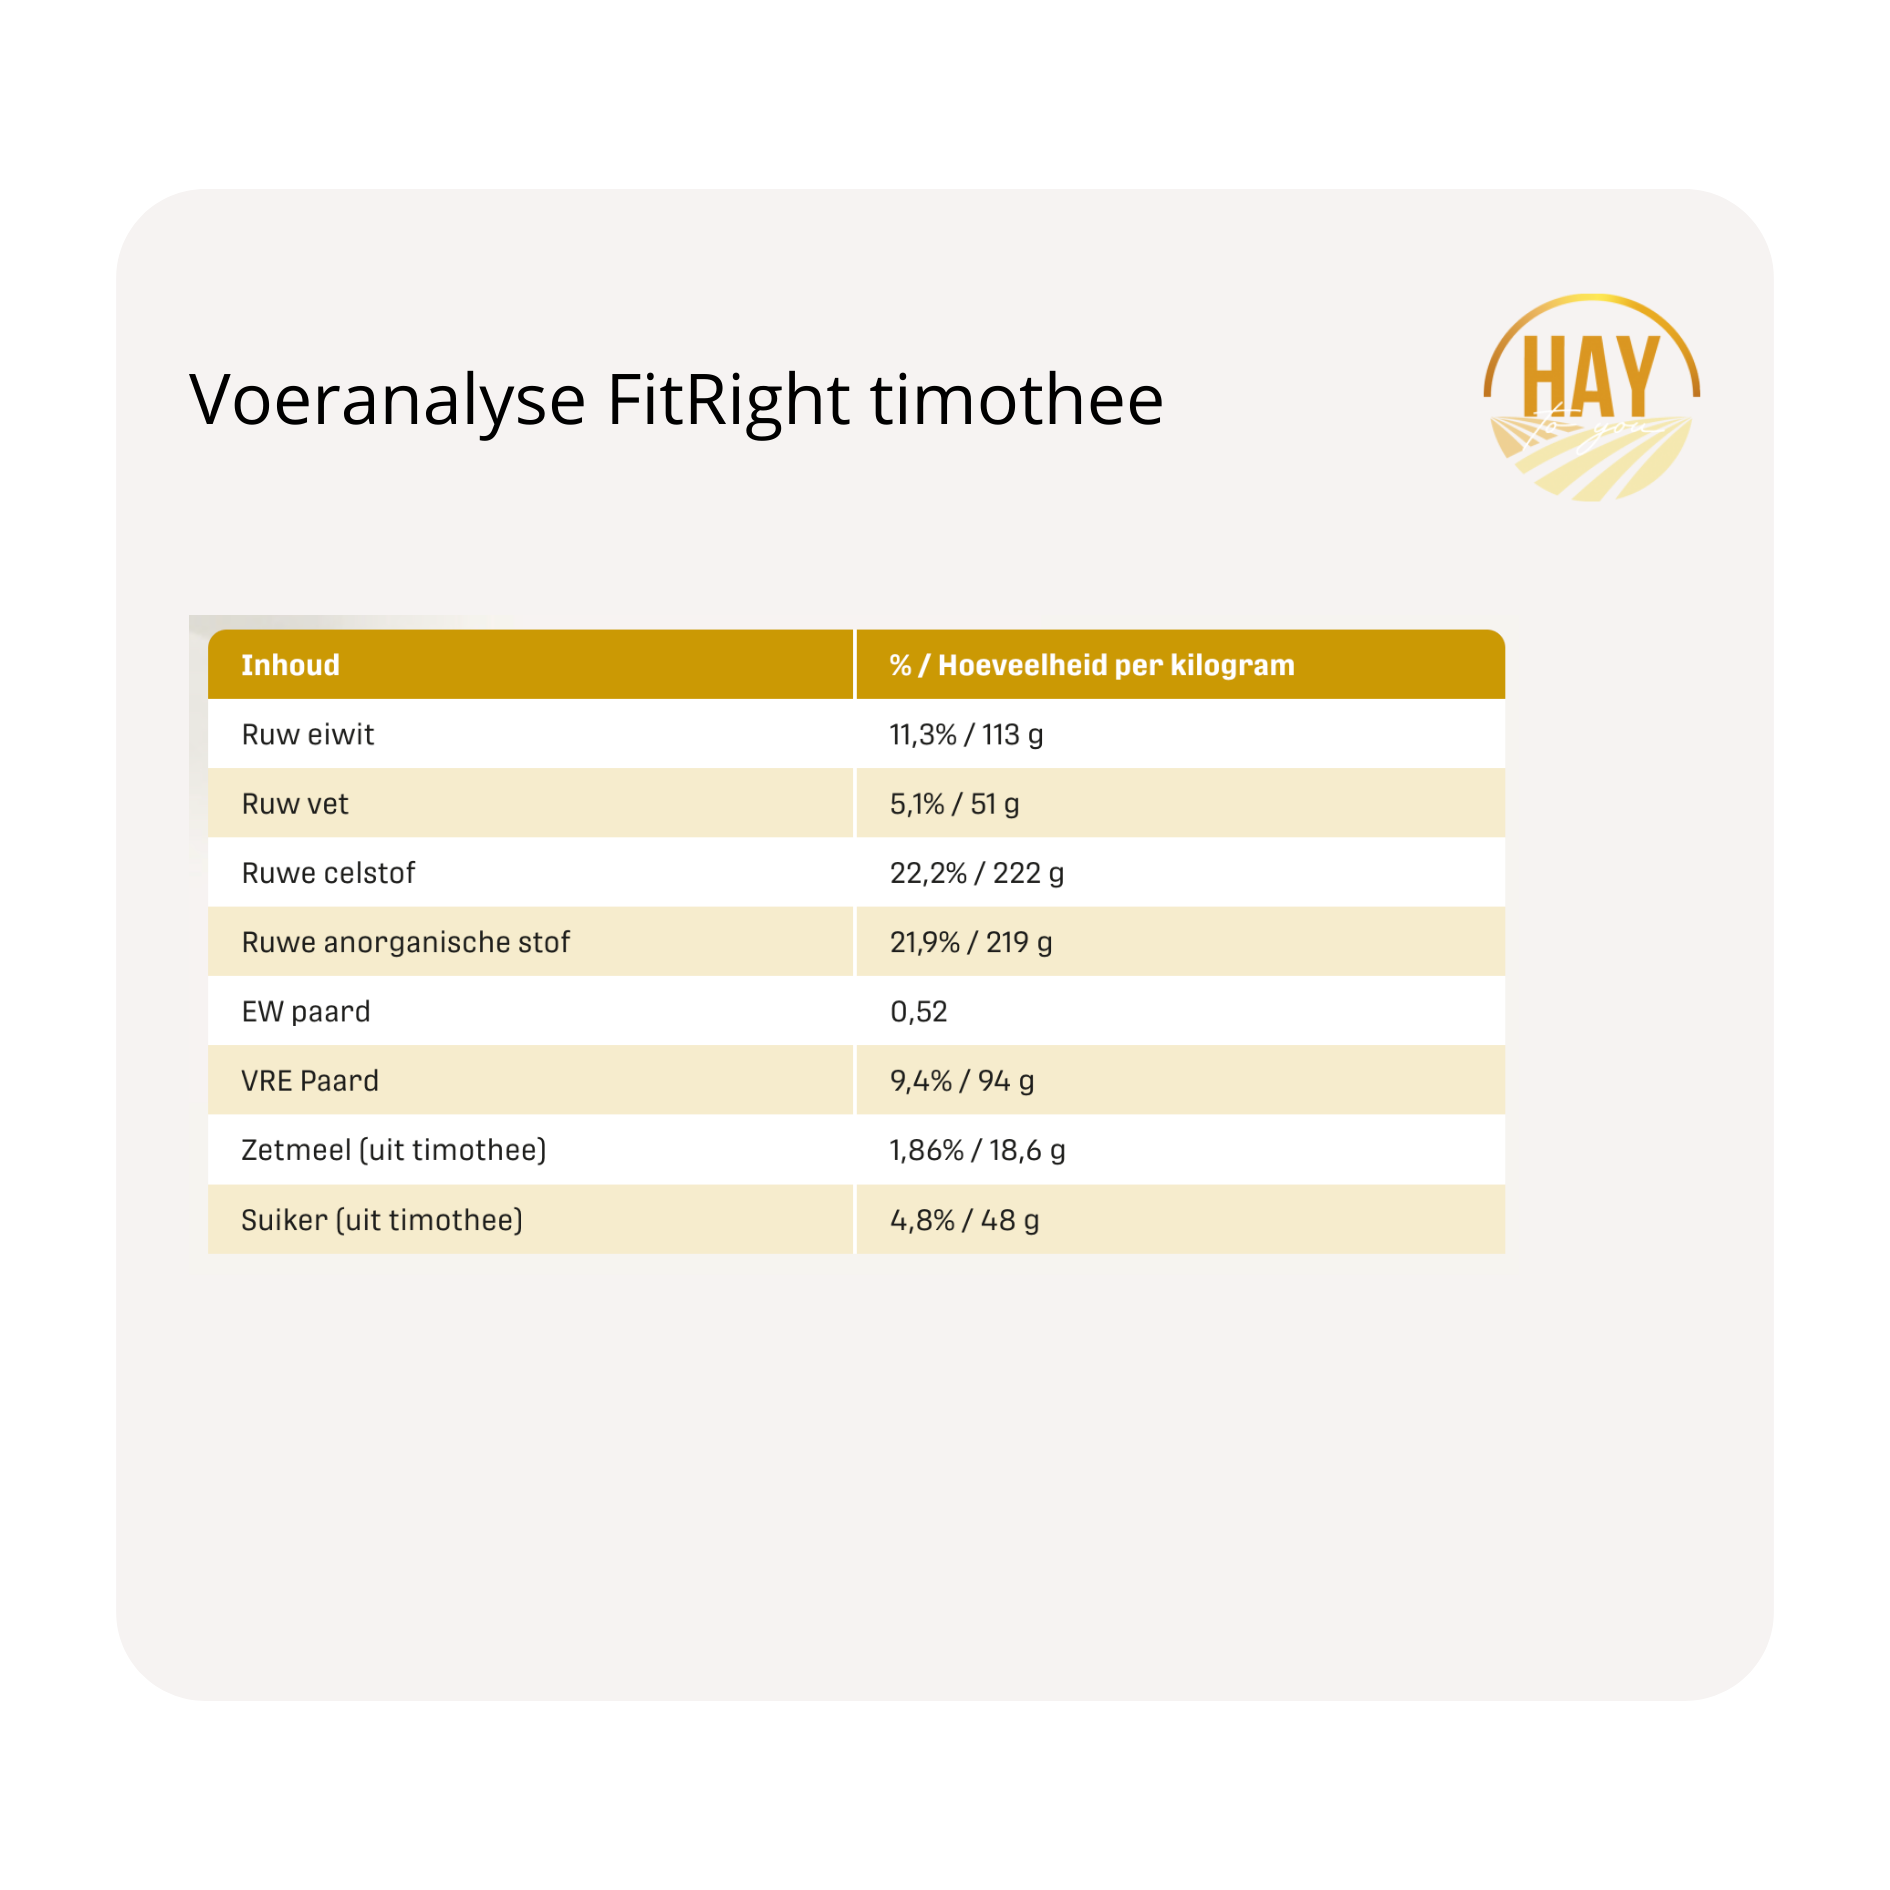 voeranalyse metazoa FitRight timothee krachtvoer en supplementen